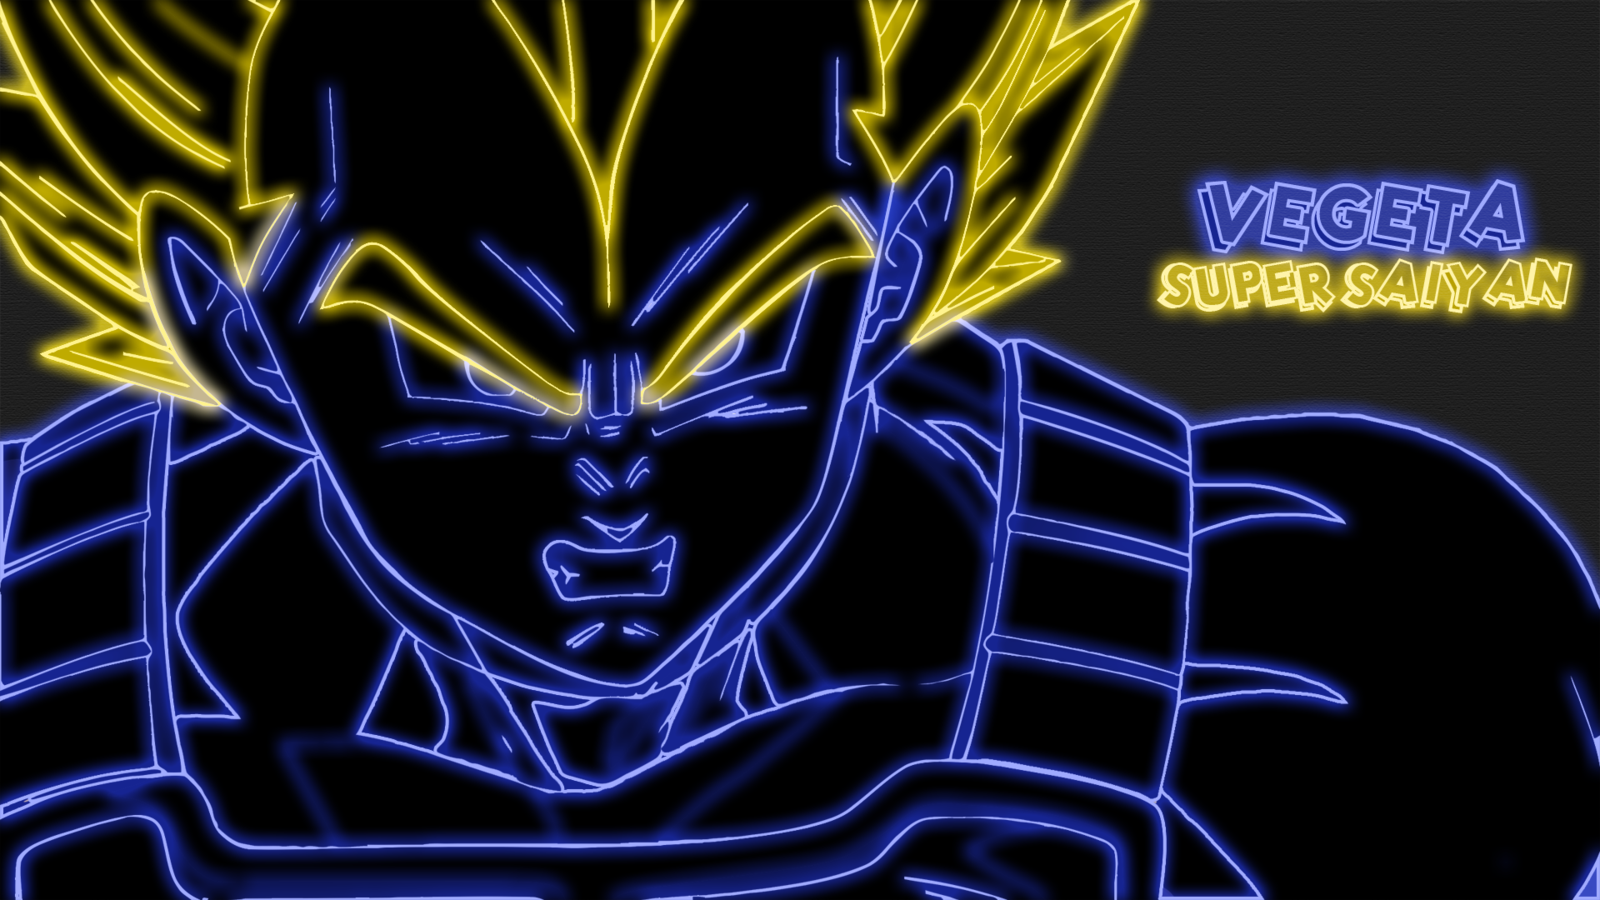 DeviantArt: More Like Vegeta Super Saiyan Neon Wallpaper by GT4tube